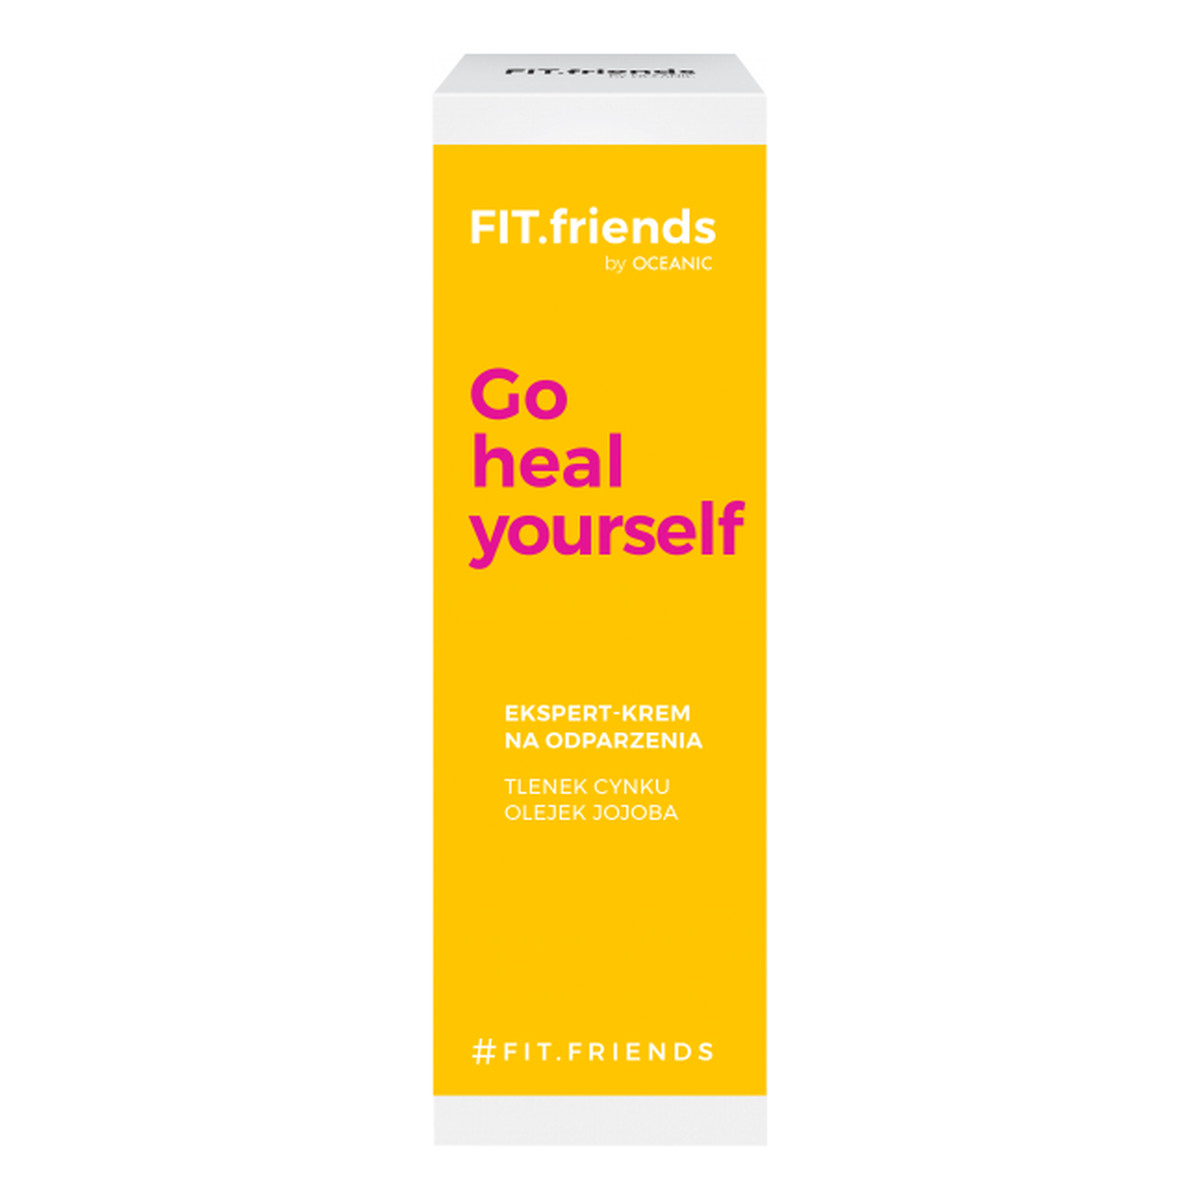 FIT.Friends Go heal yourself ekspert-krem na odparzenia 30ml